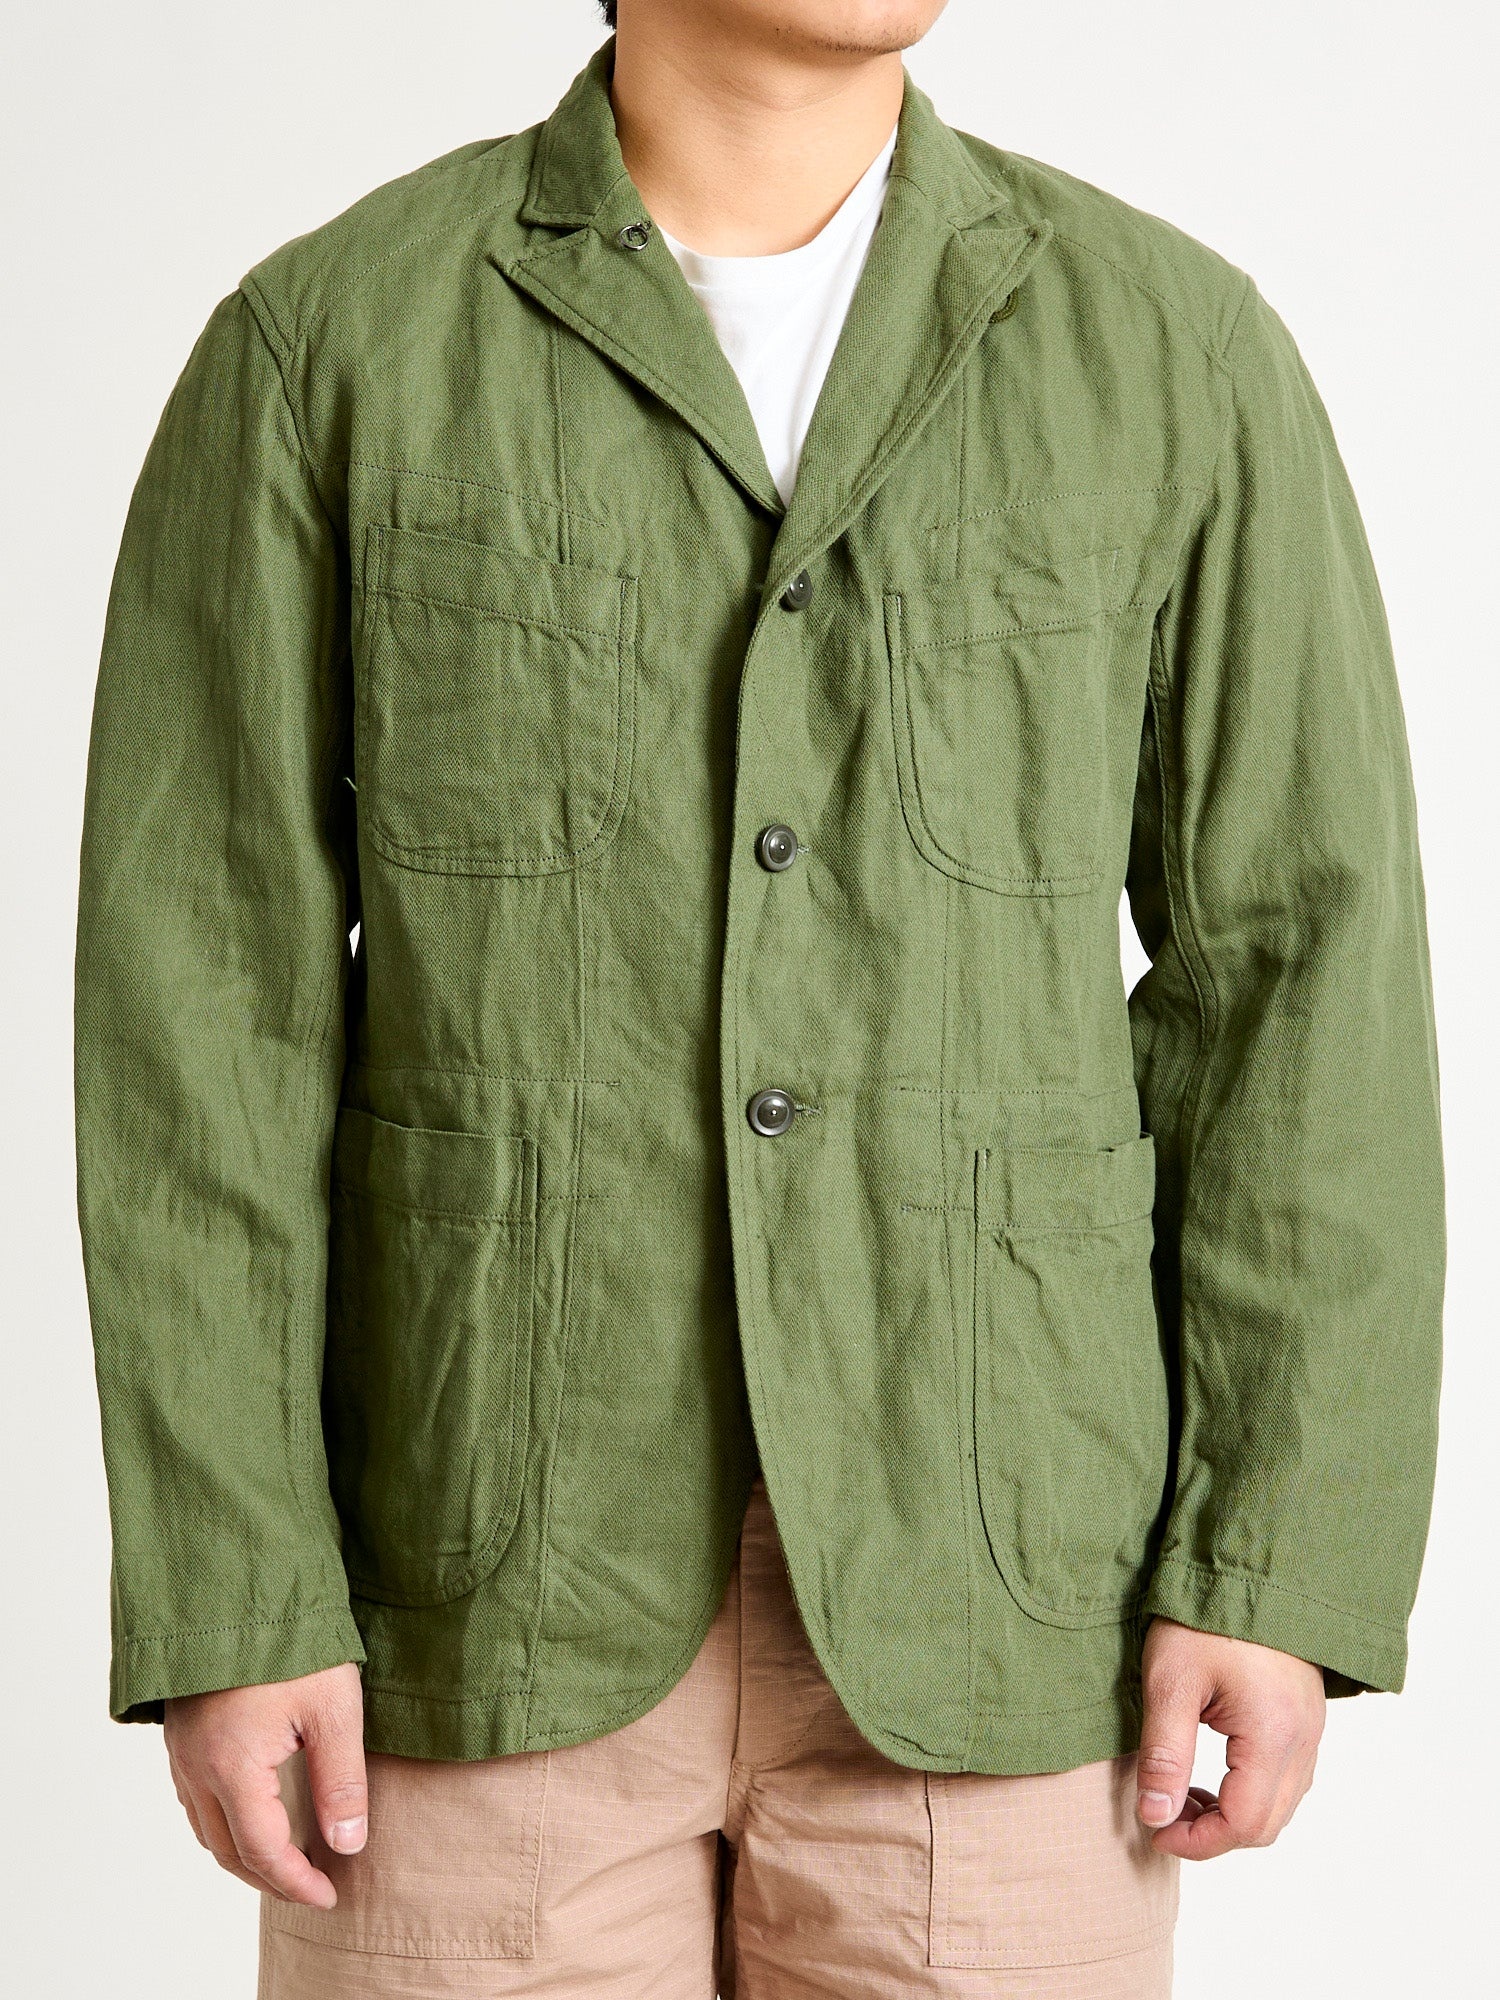 Bedford Jacket in Olive Cotton Hemp Satin - 2